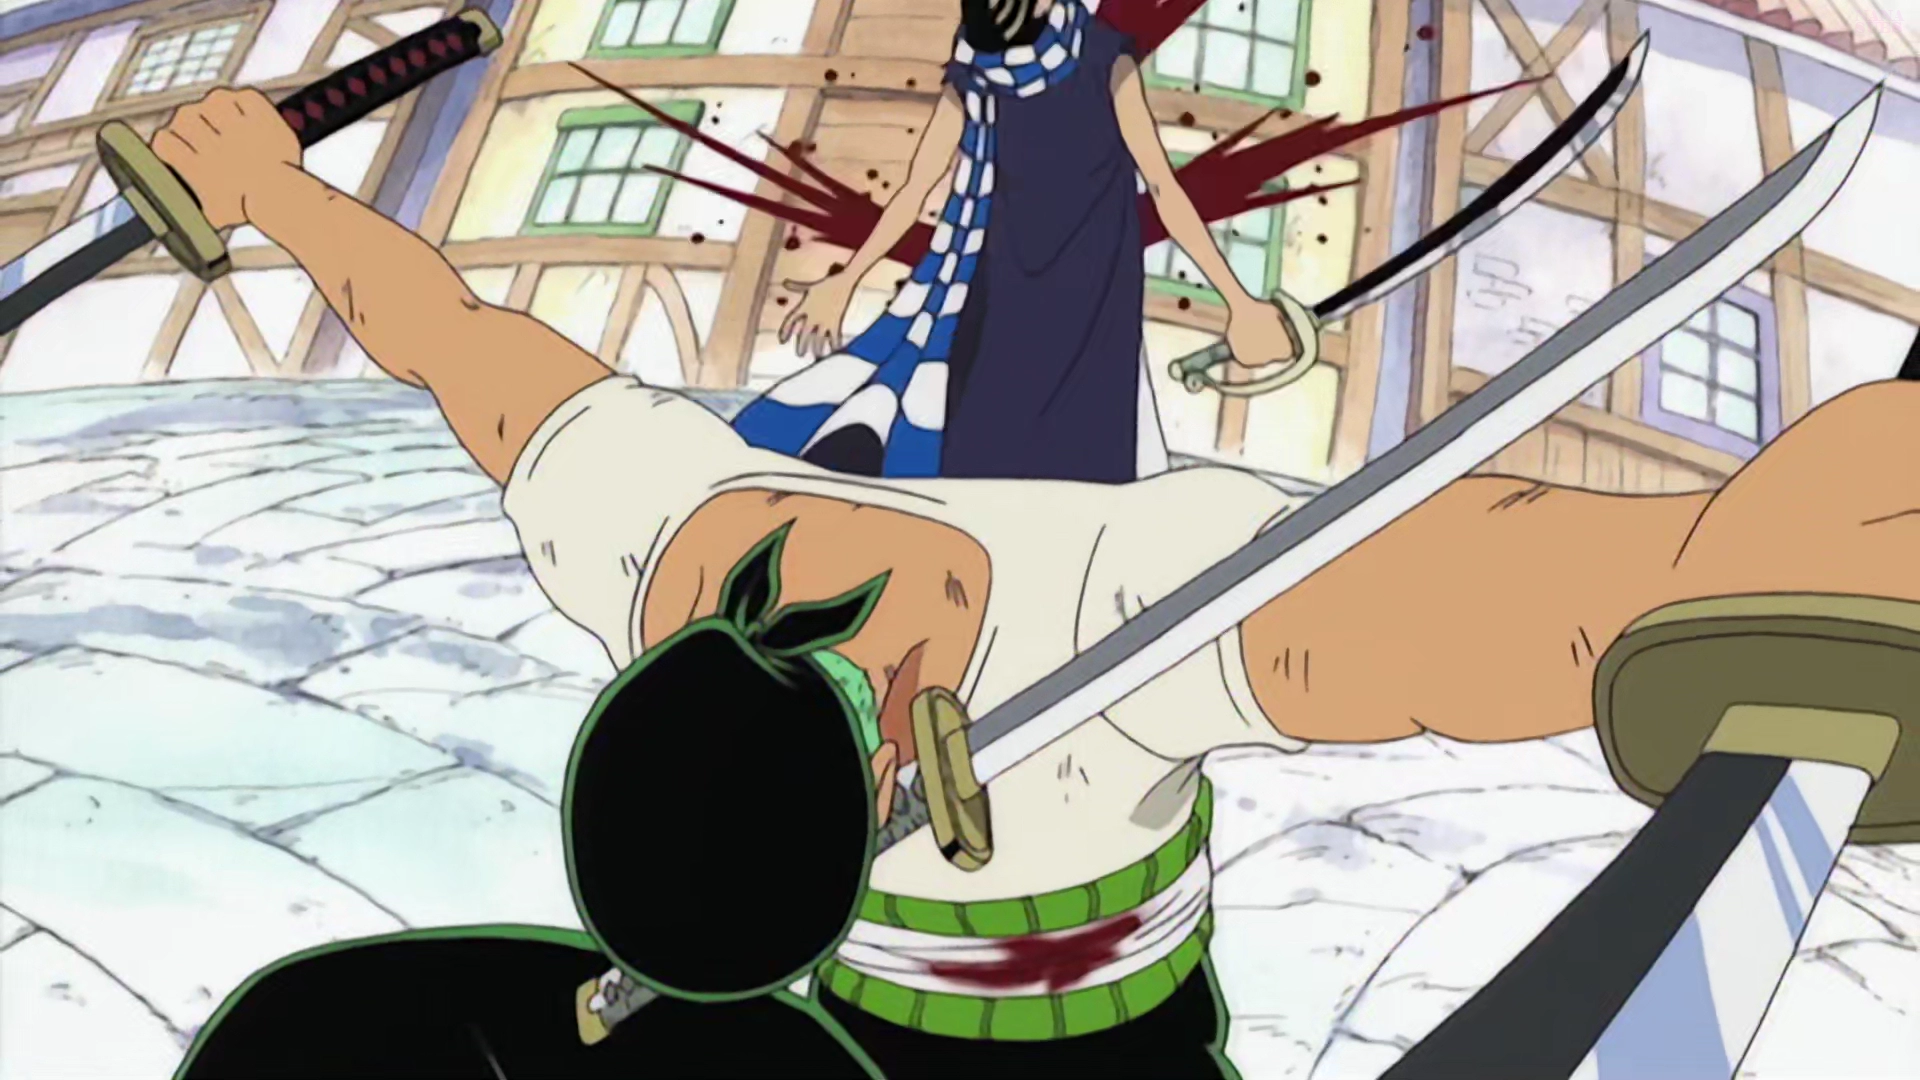 Minaturka 7 odcinka anime One Piece